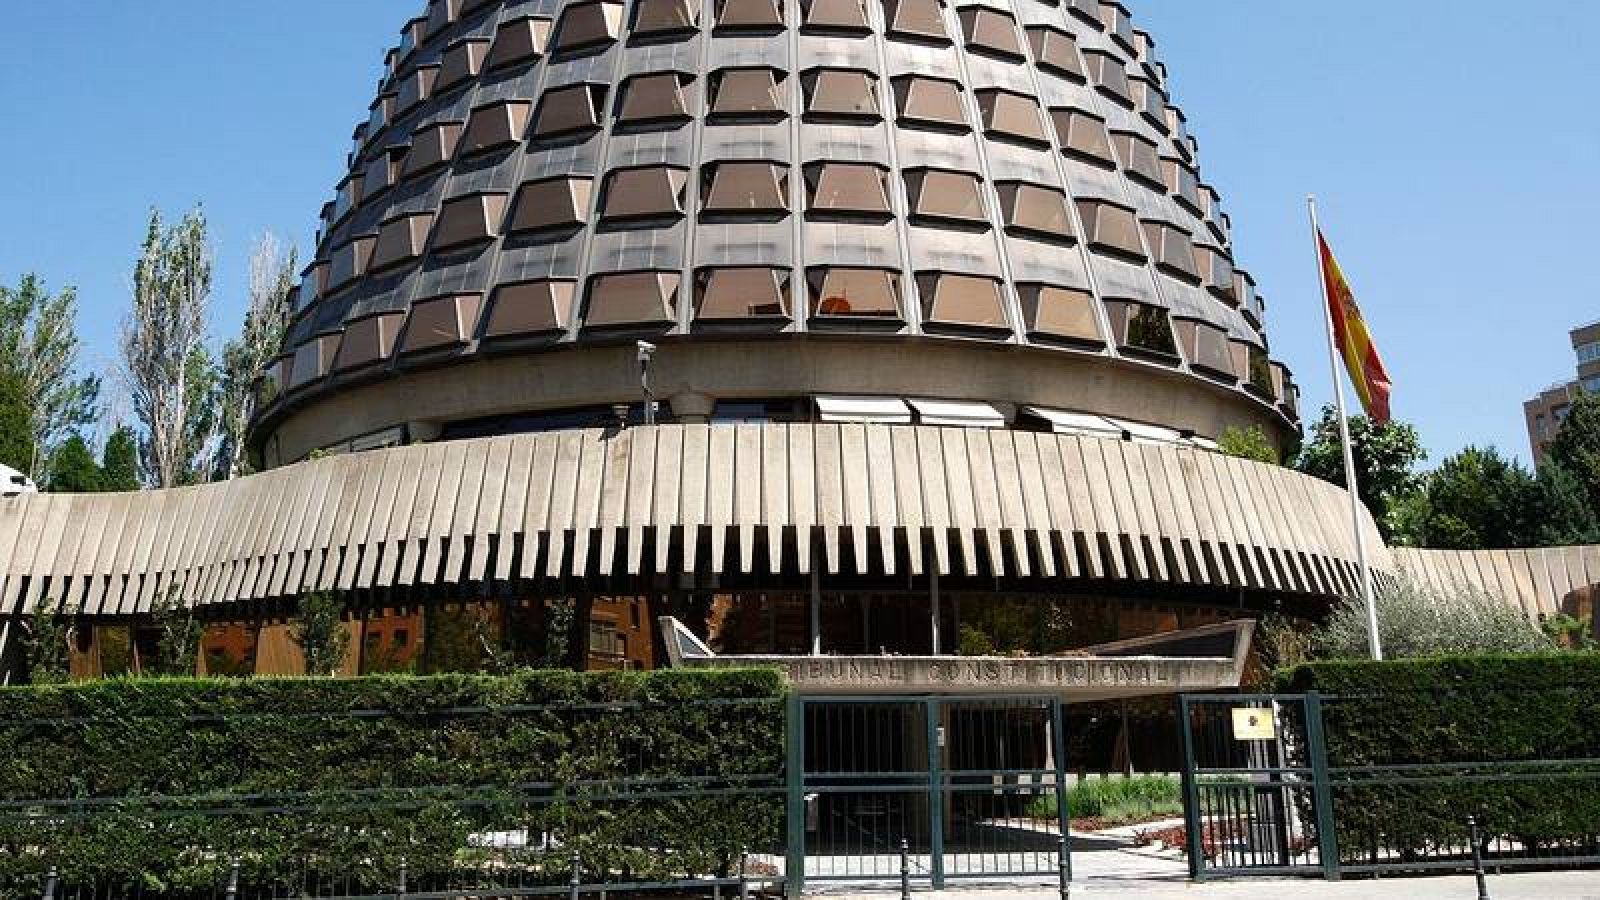  Edificio sede del Tribunal Constitucional en la calle Domenico Scarlatti de Madrid.